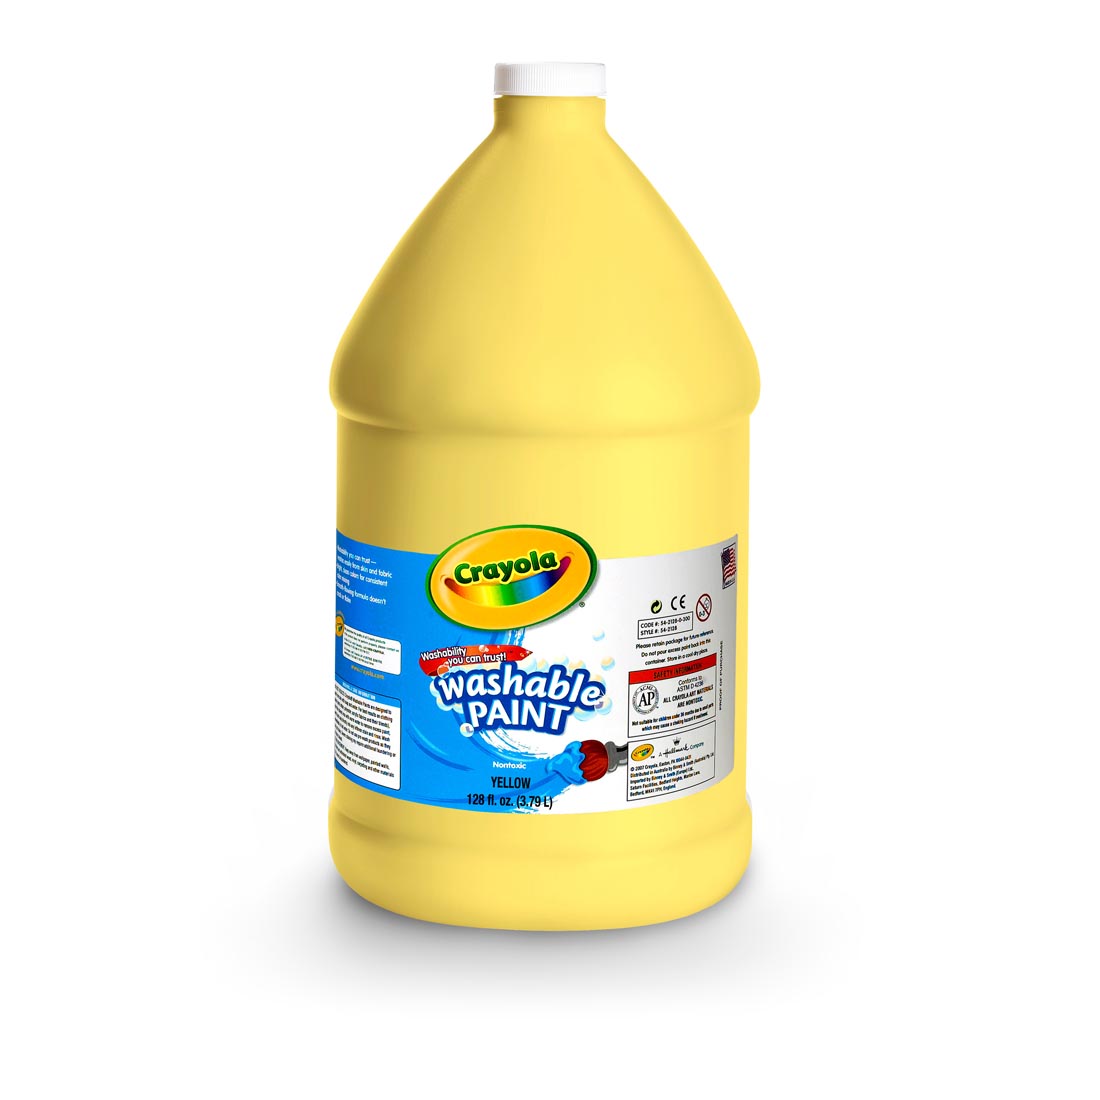 Gallon Jug of Yellow Crayola Washable Paint